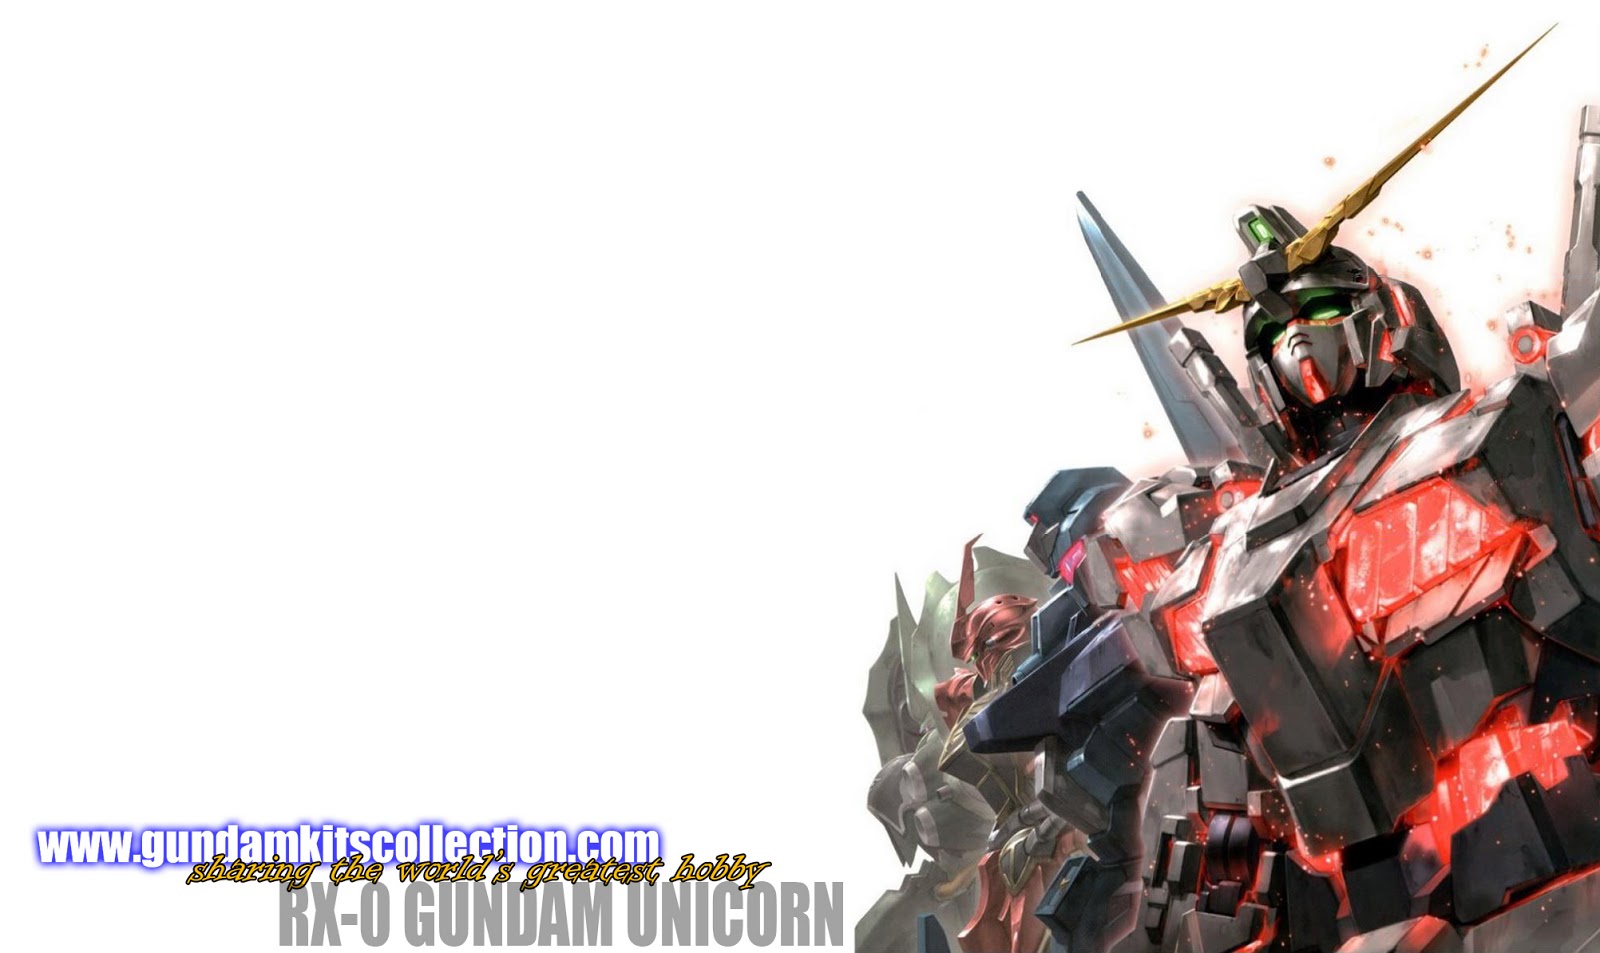 Gundam Unicorn and Banshee Wallpaper   Gundam Kits Collection News and